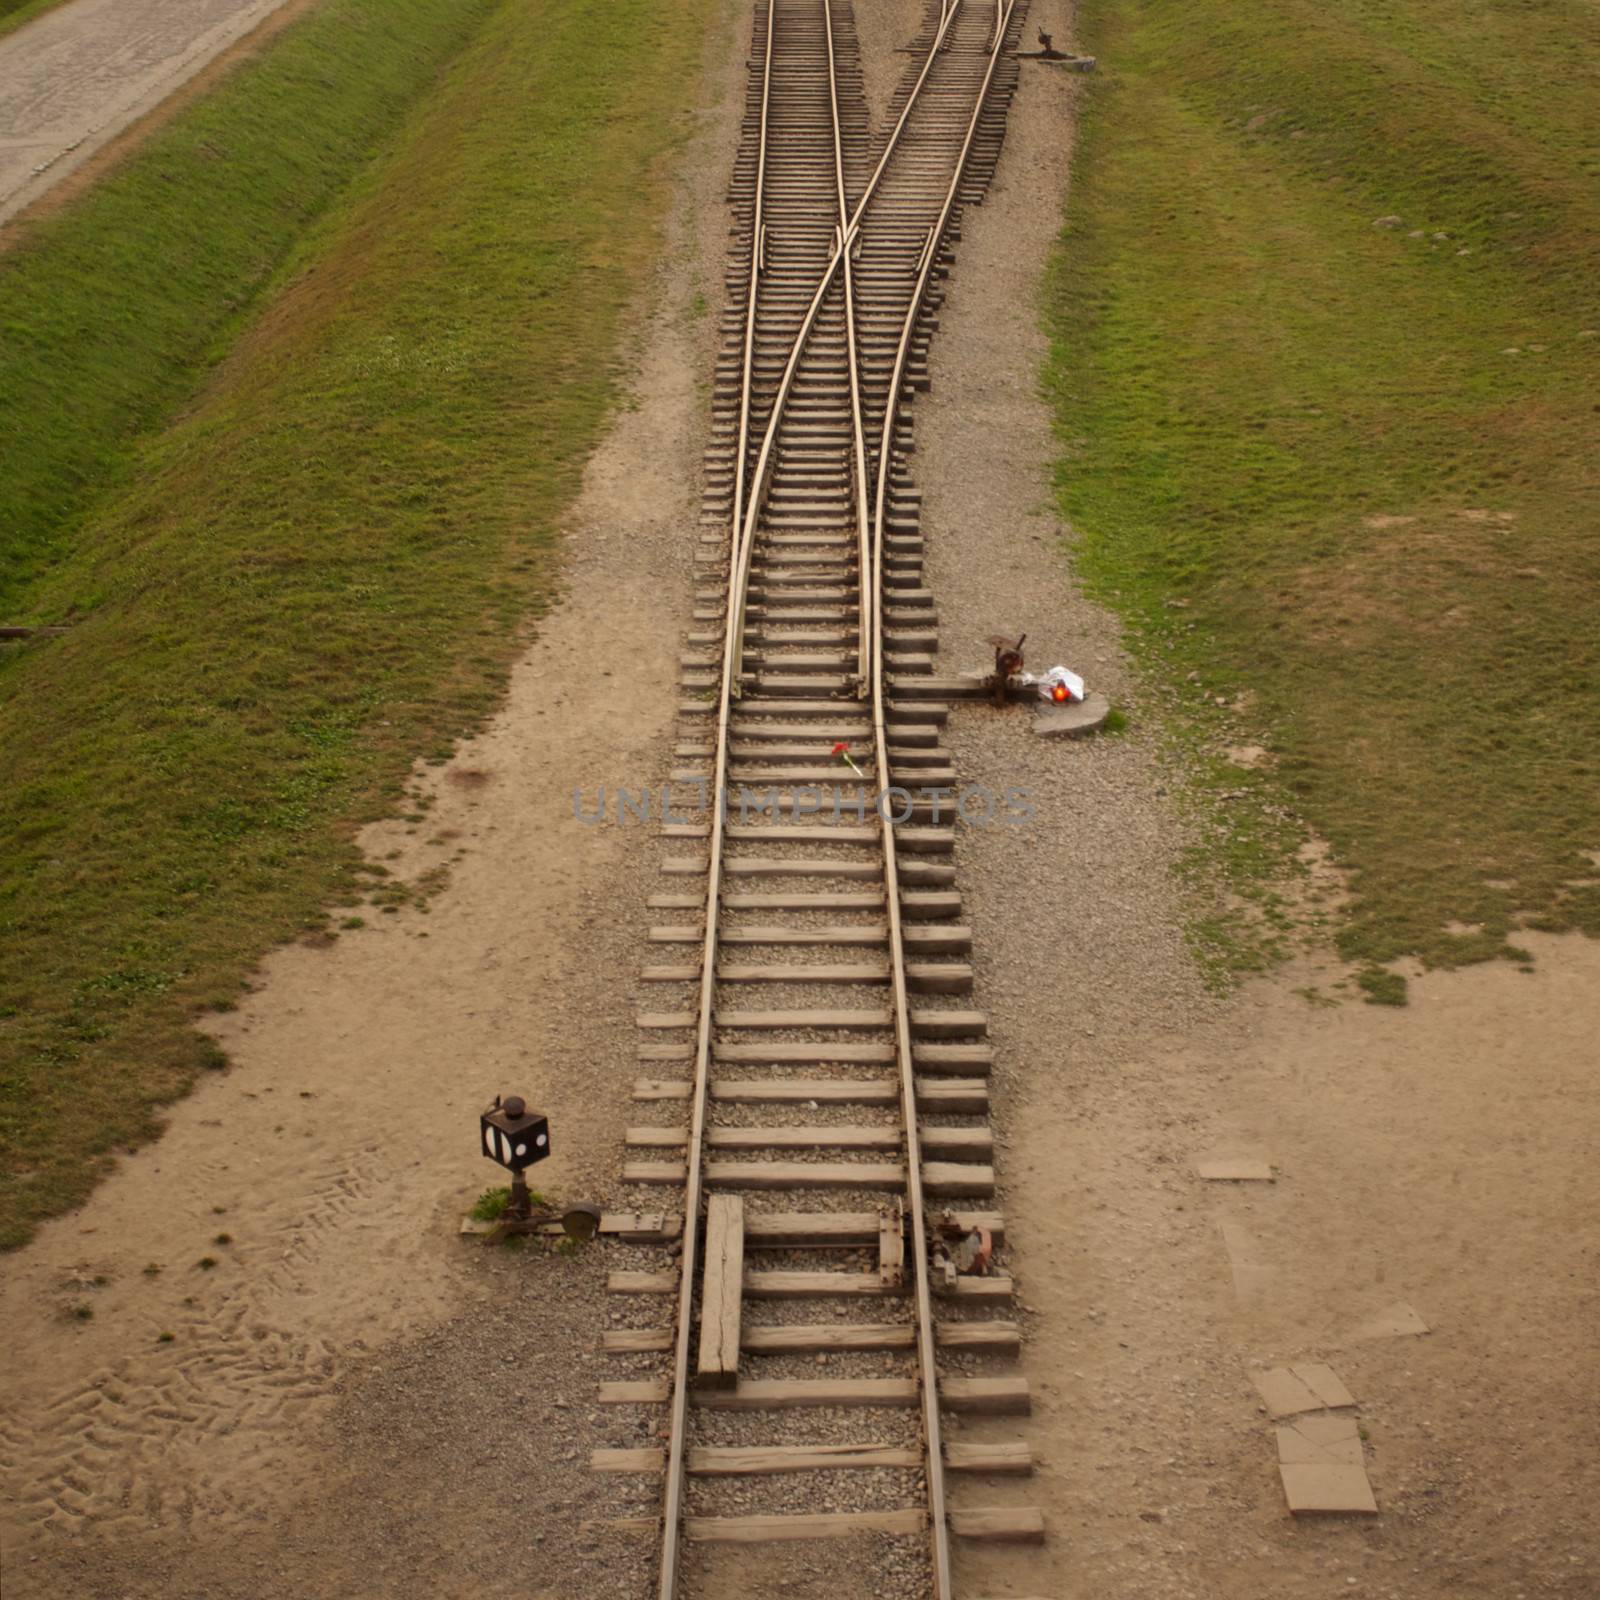 Train track arriving in Auschwitz Birkenau concentration camp